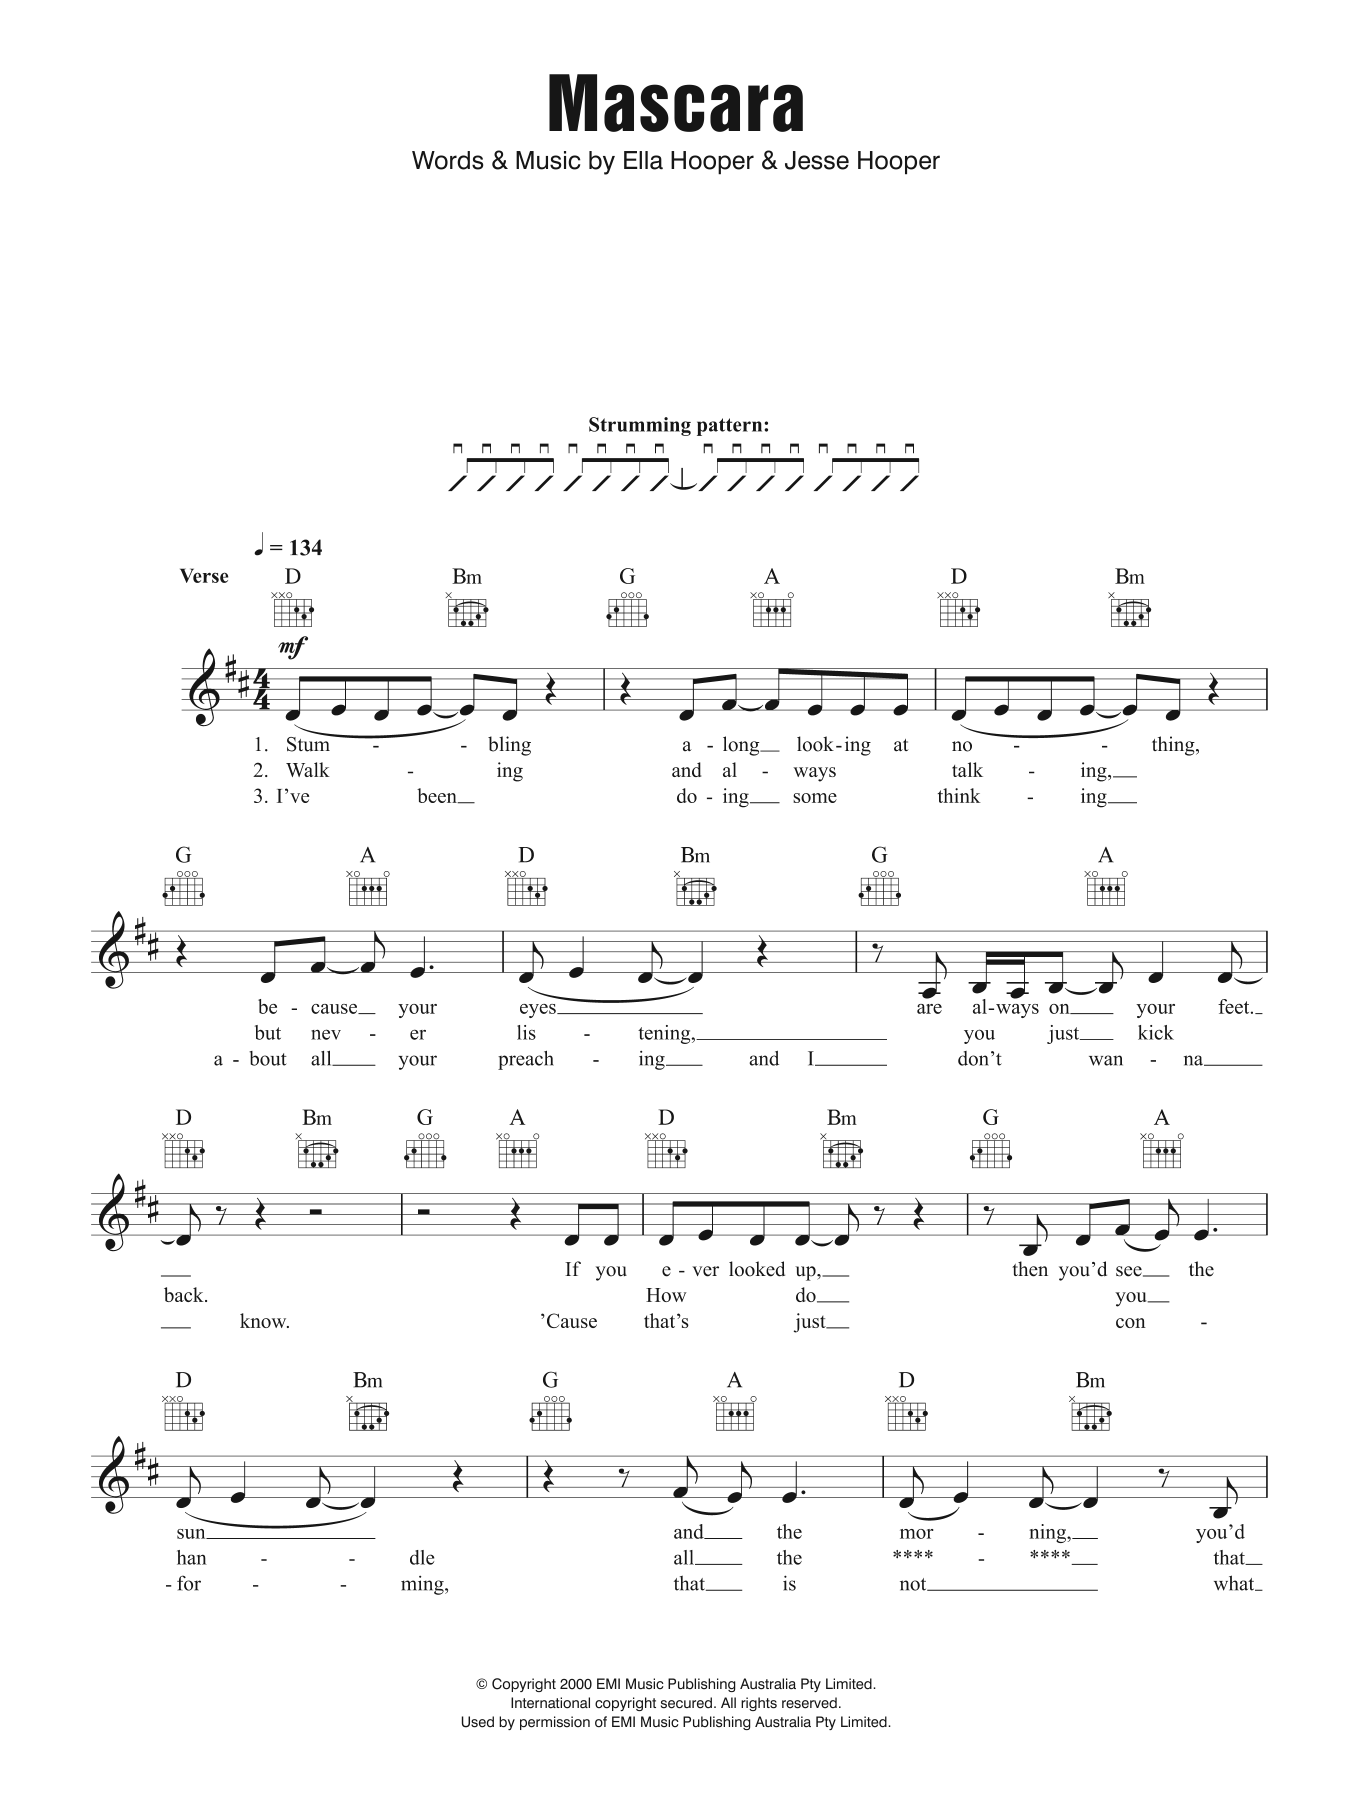 Killing Heidi Mascara sheet music notes and chords arranged for Lead Sheet / Fake Book